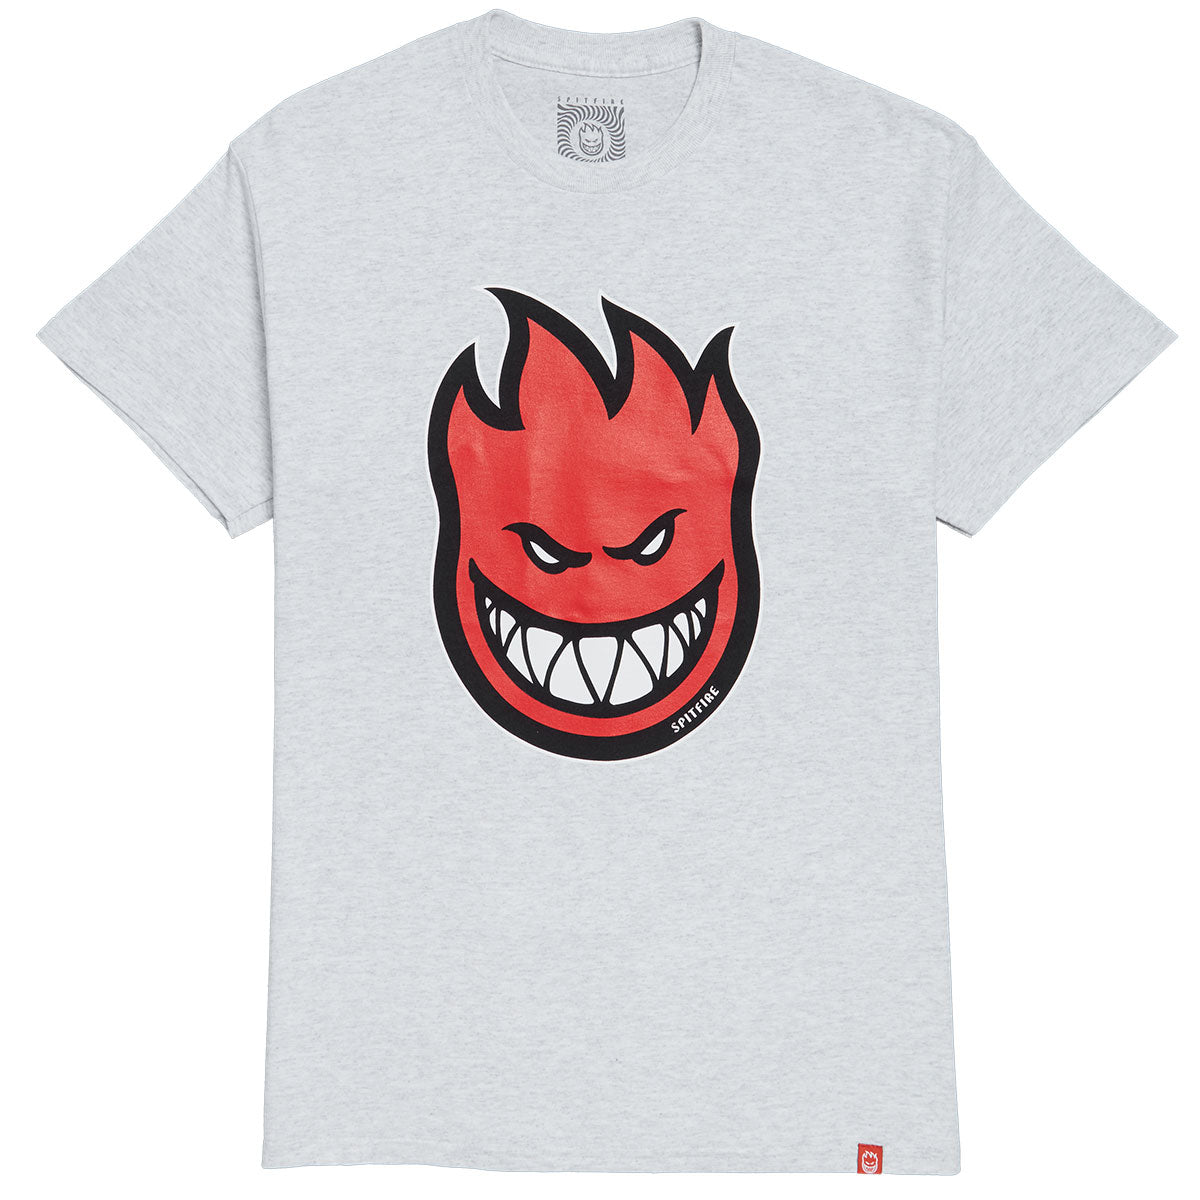 Spitfire Bighead Fill T-Shirt - Ash/Red/Black/White image 1